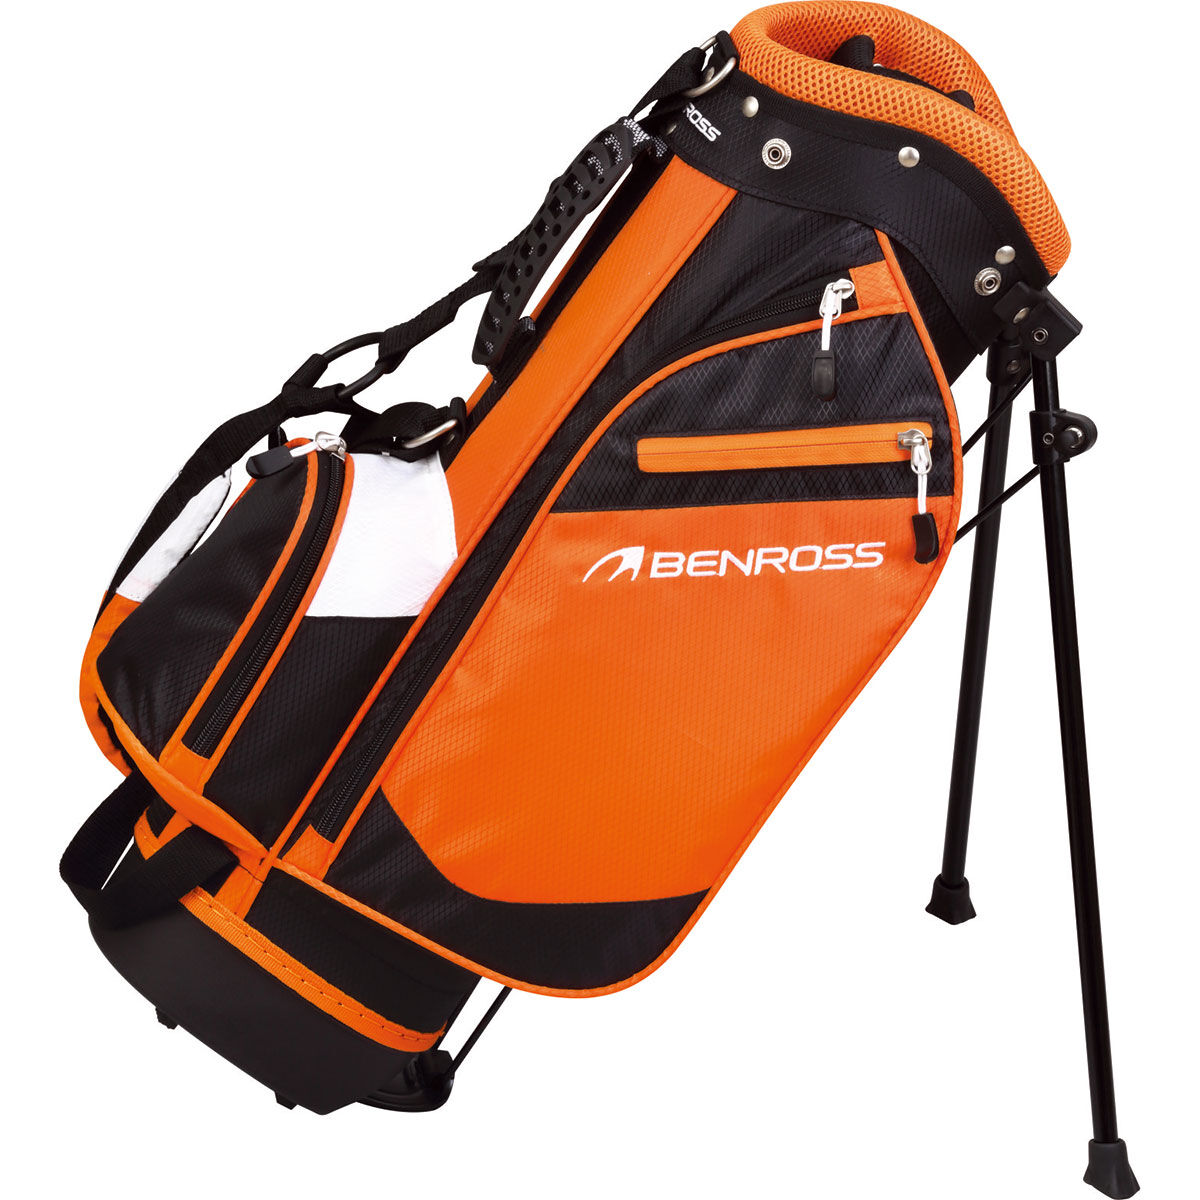 Benross Junior 43-49"" Golf Stand Bag, Unisex, Orange, 43-49inches | American Golf